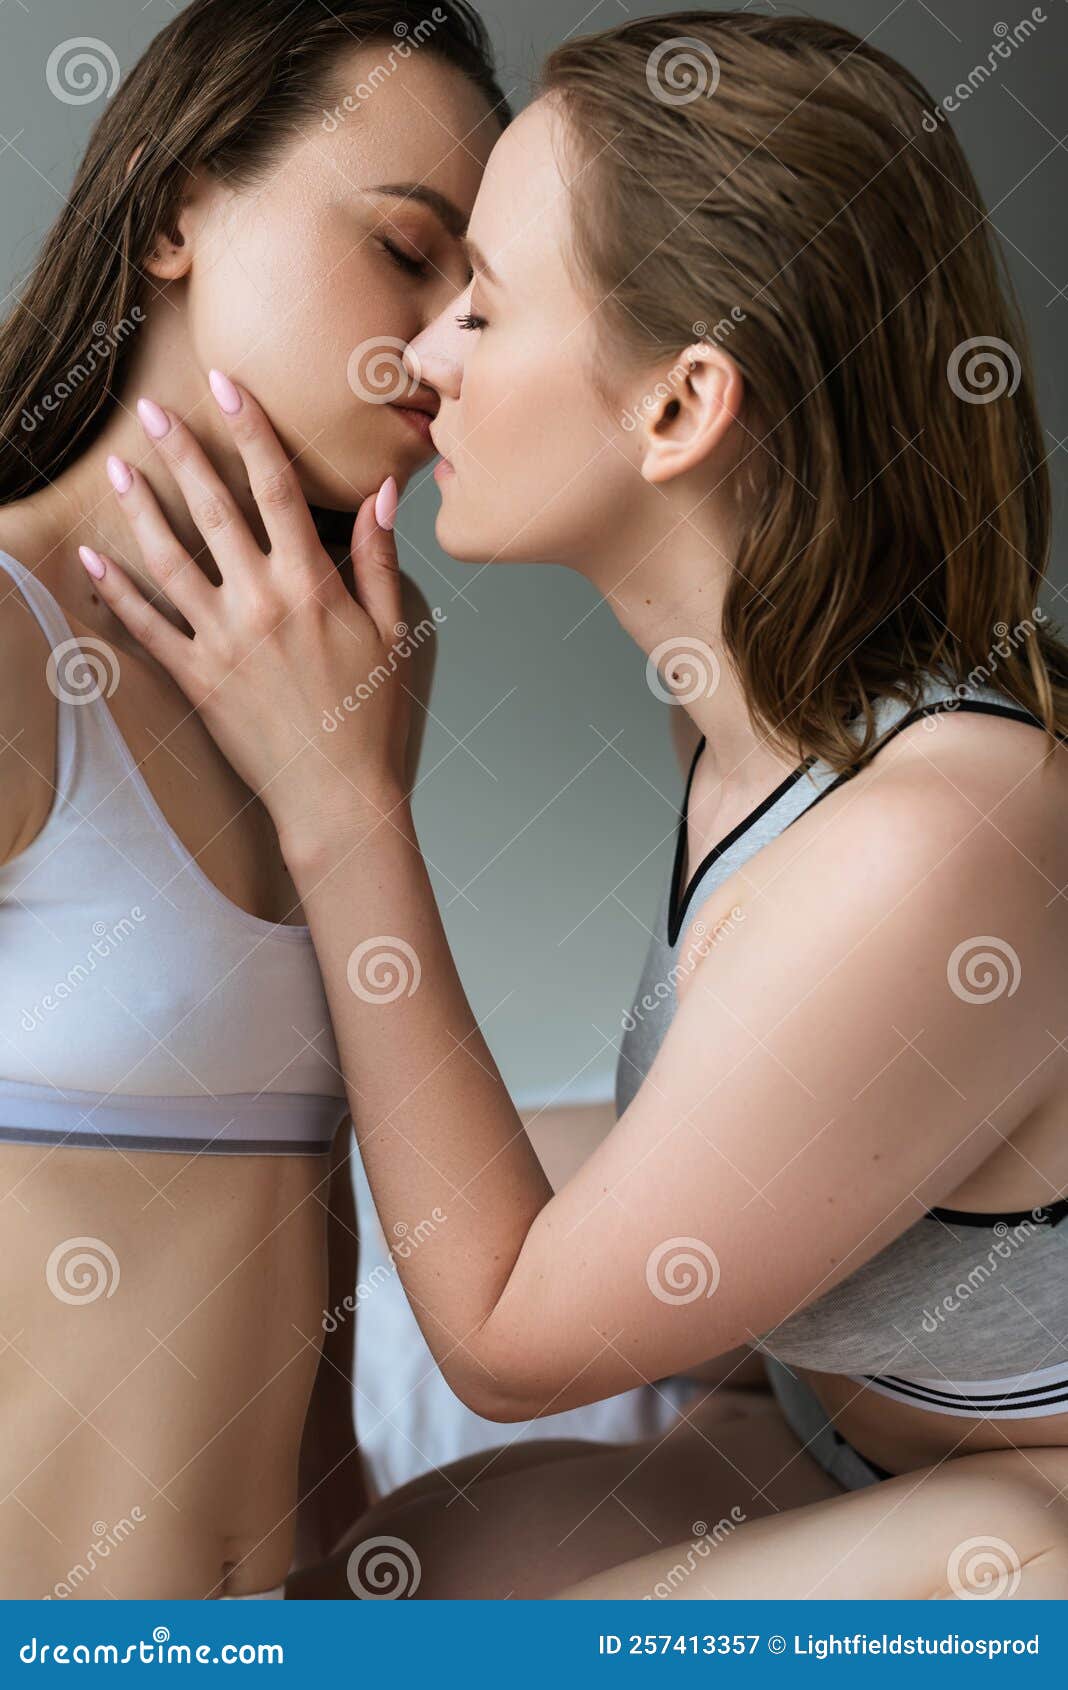 Chicas lesbianas besandose